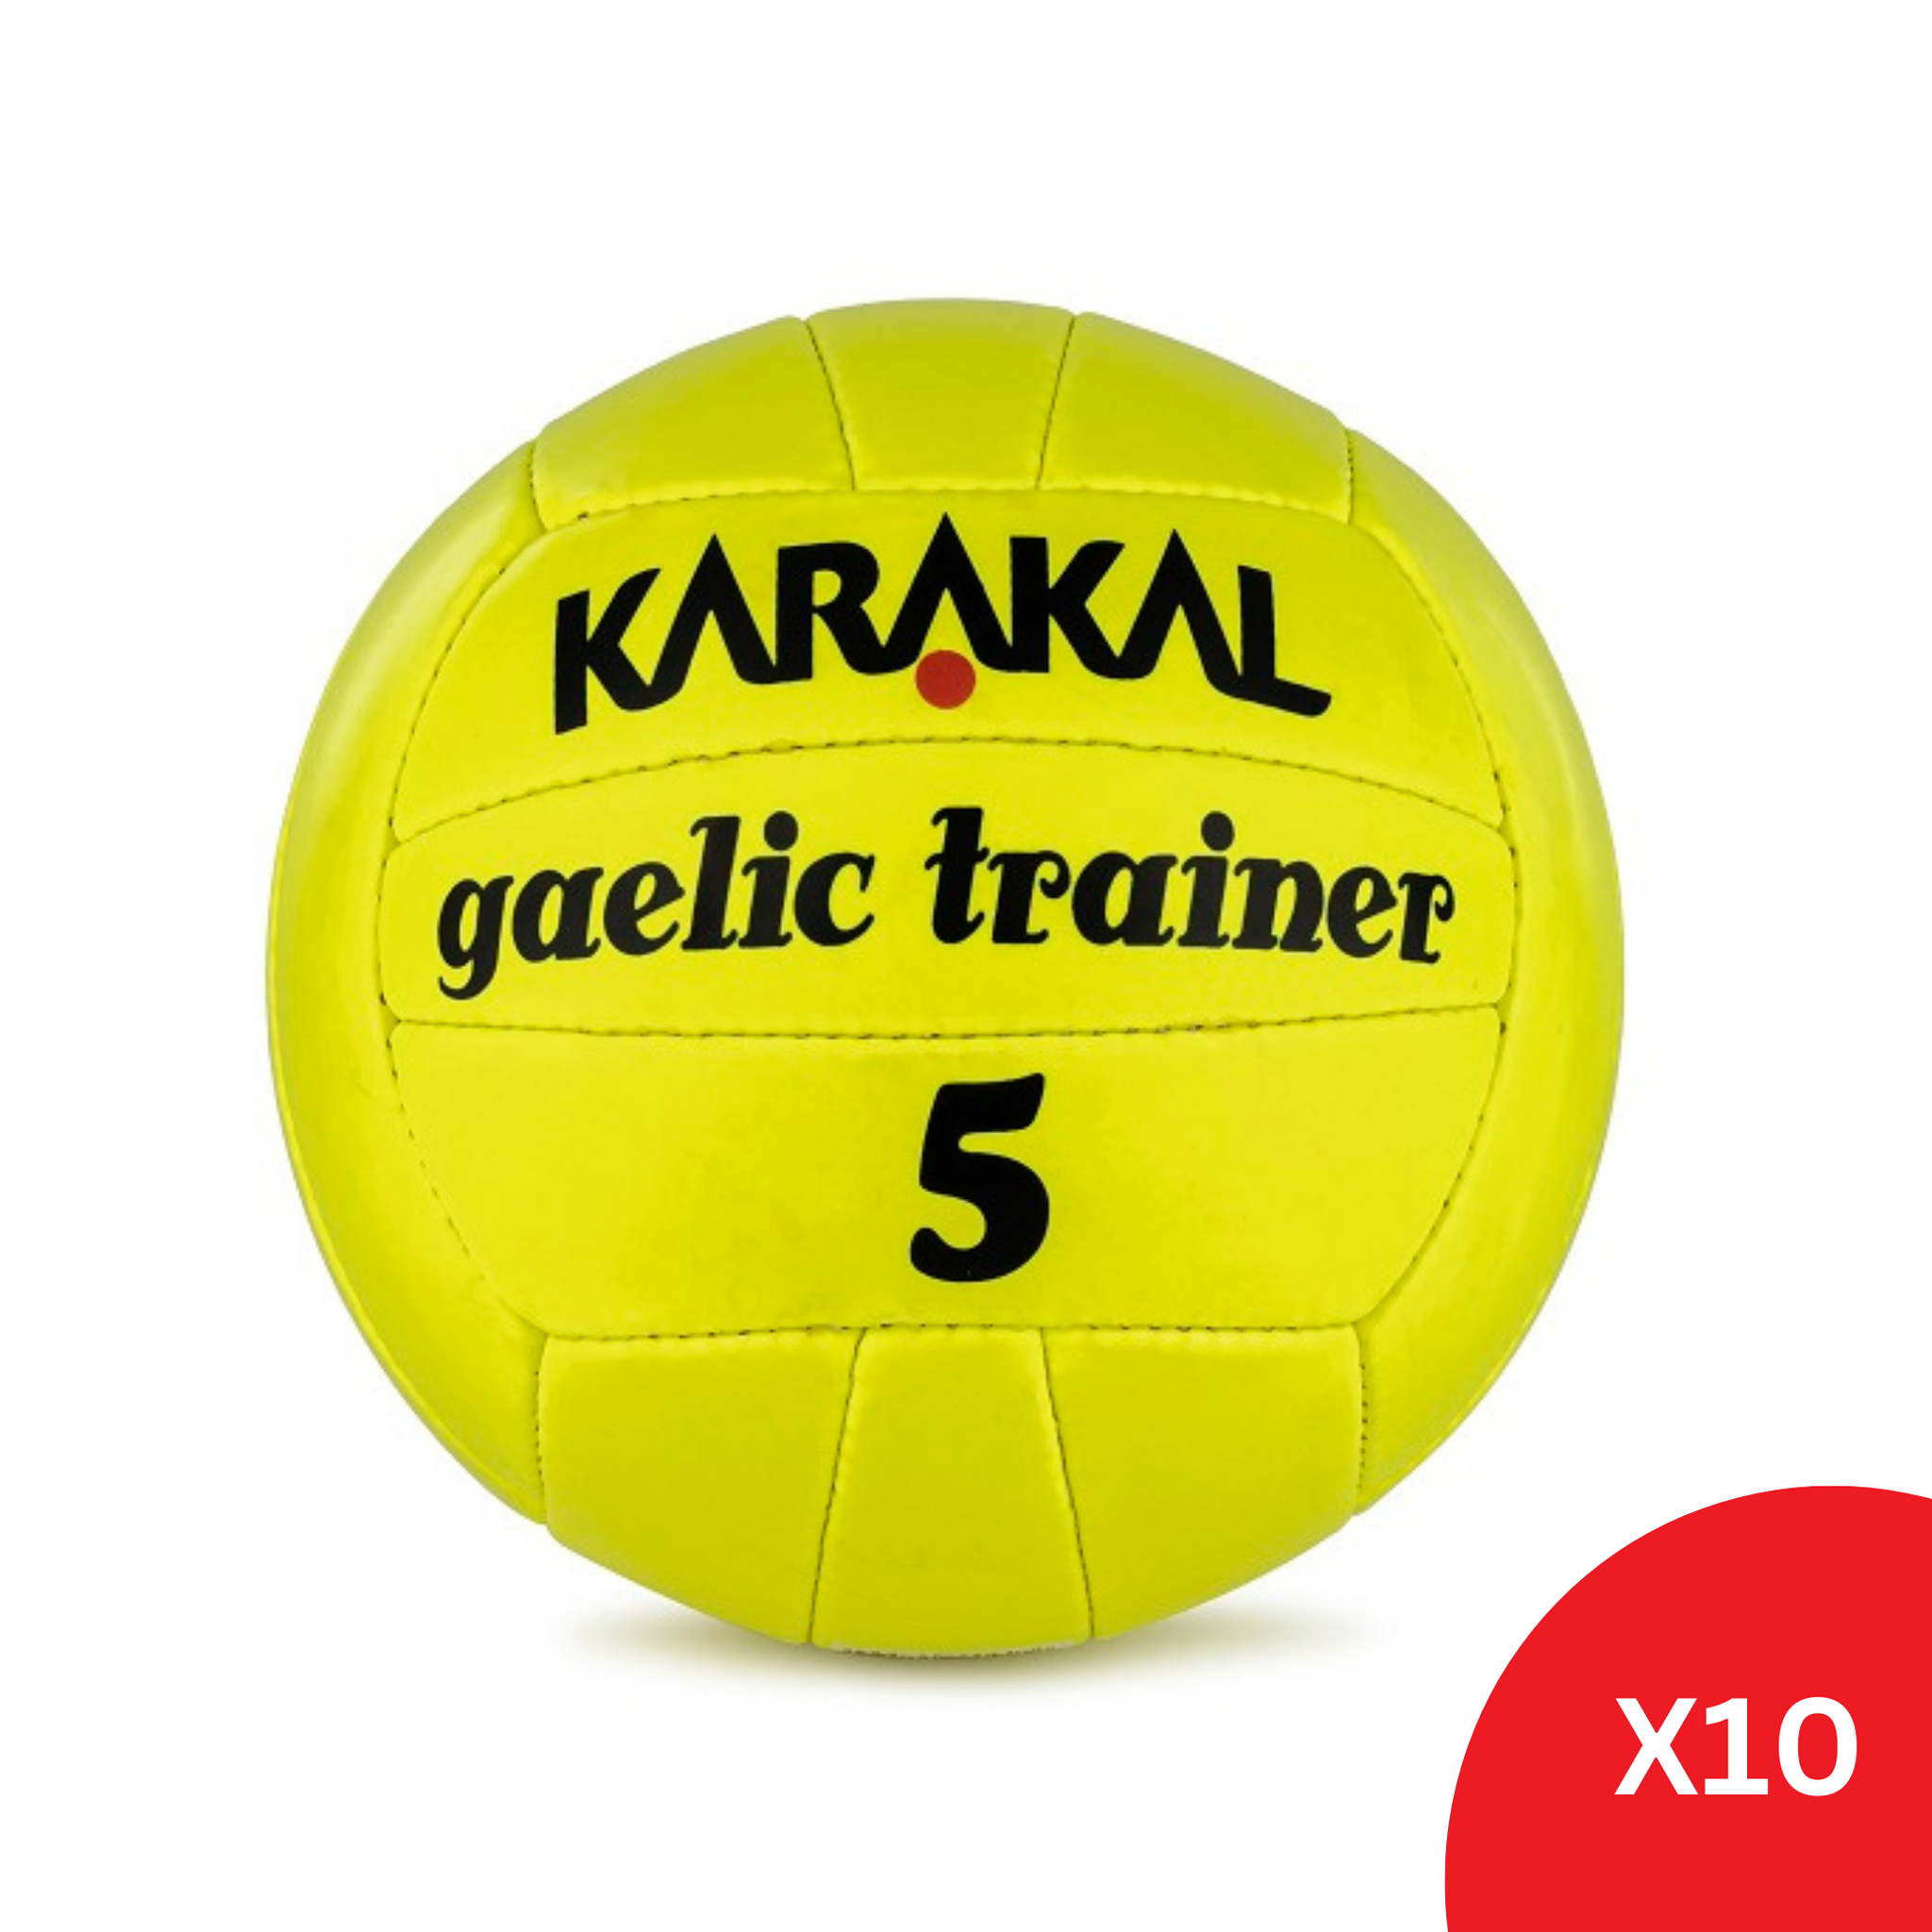 Karakal Gaelic Trainer Ball Size 5 (Fluo Yellow) - 10 Pack